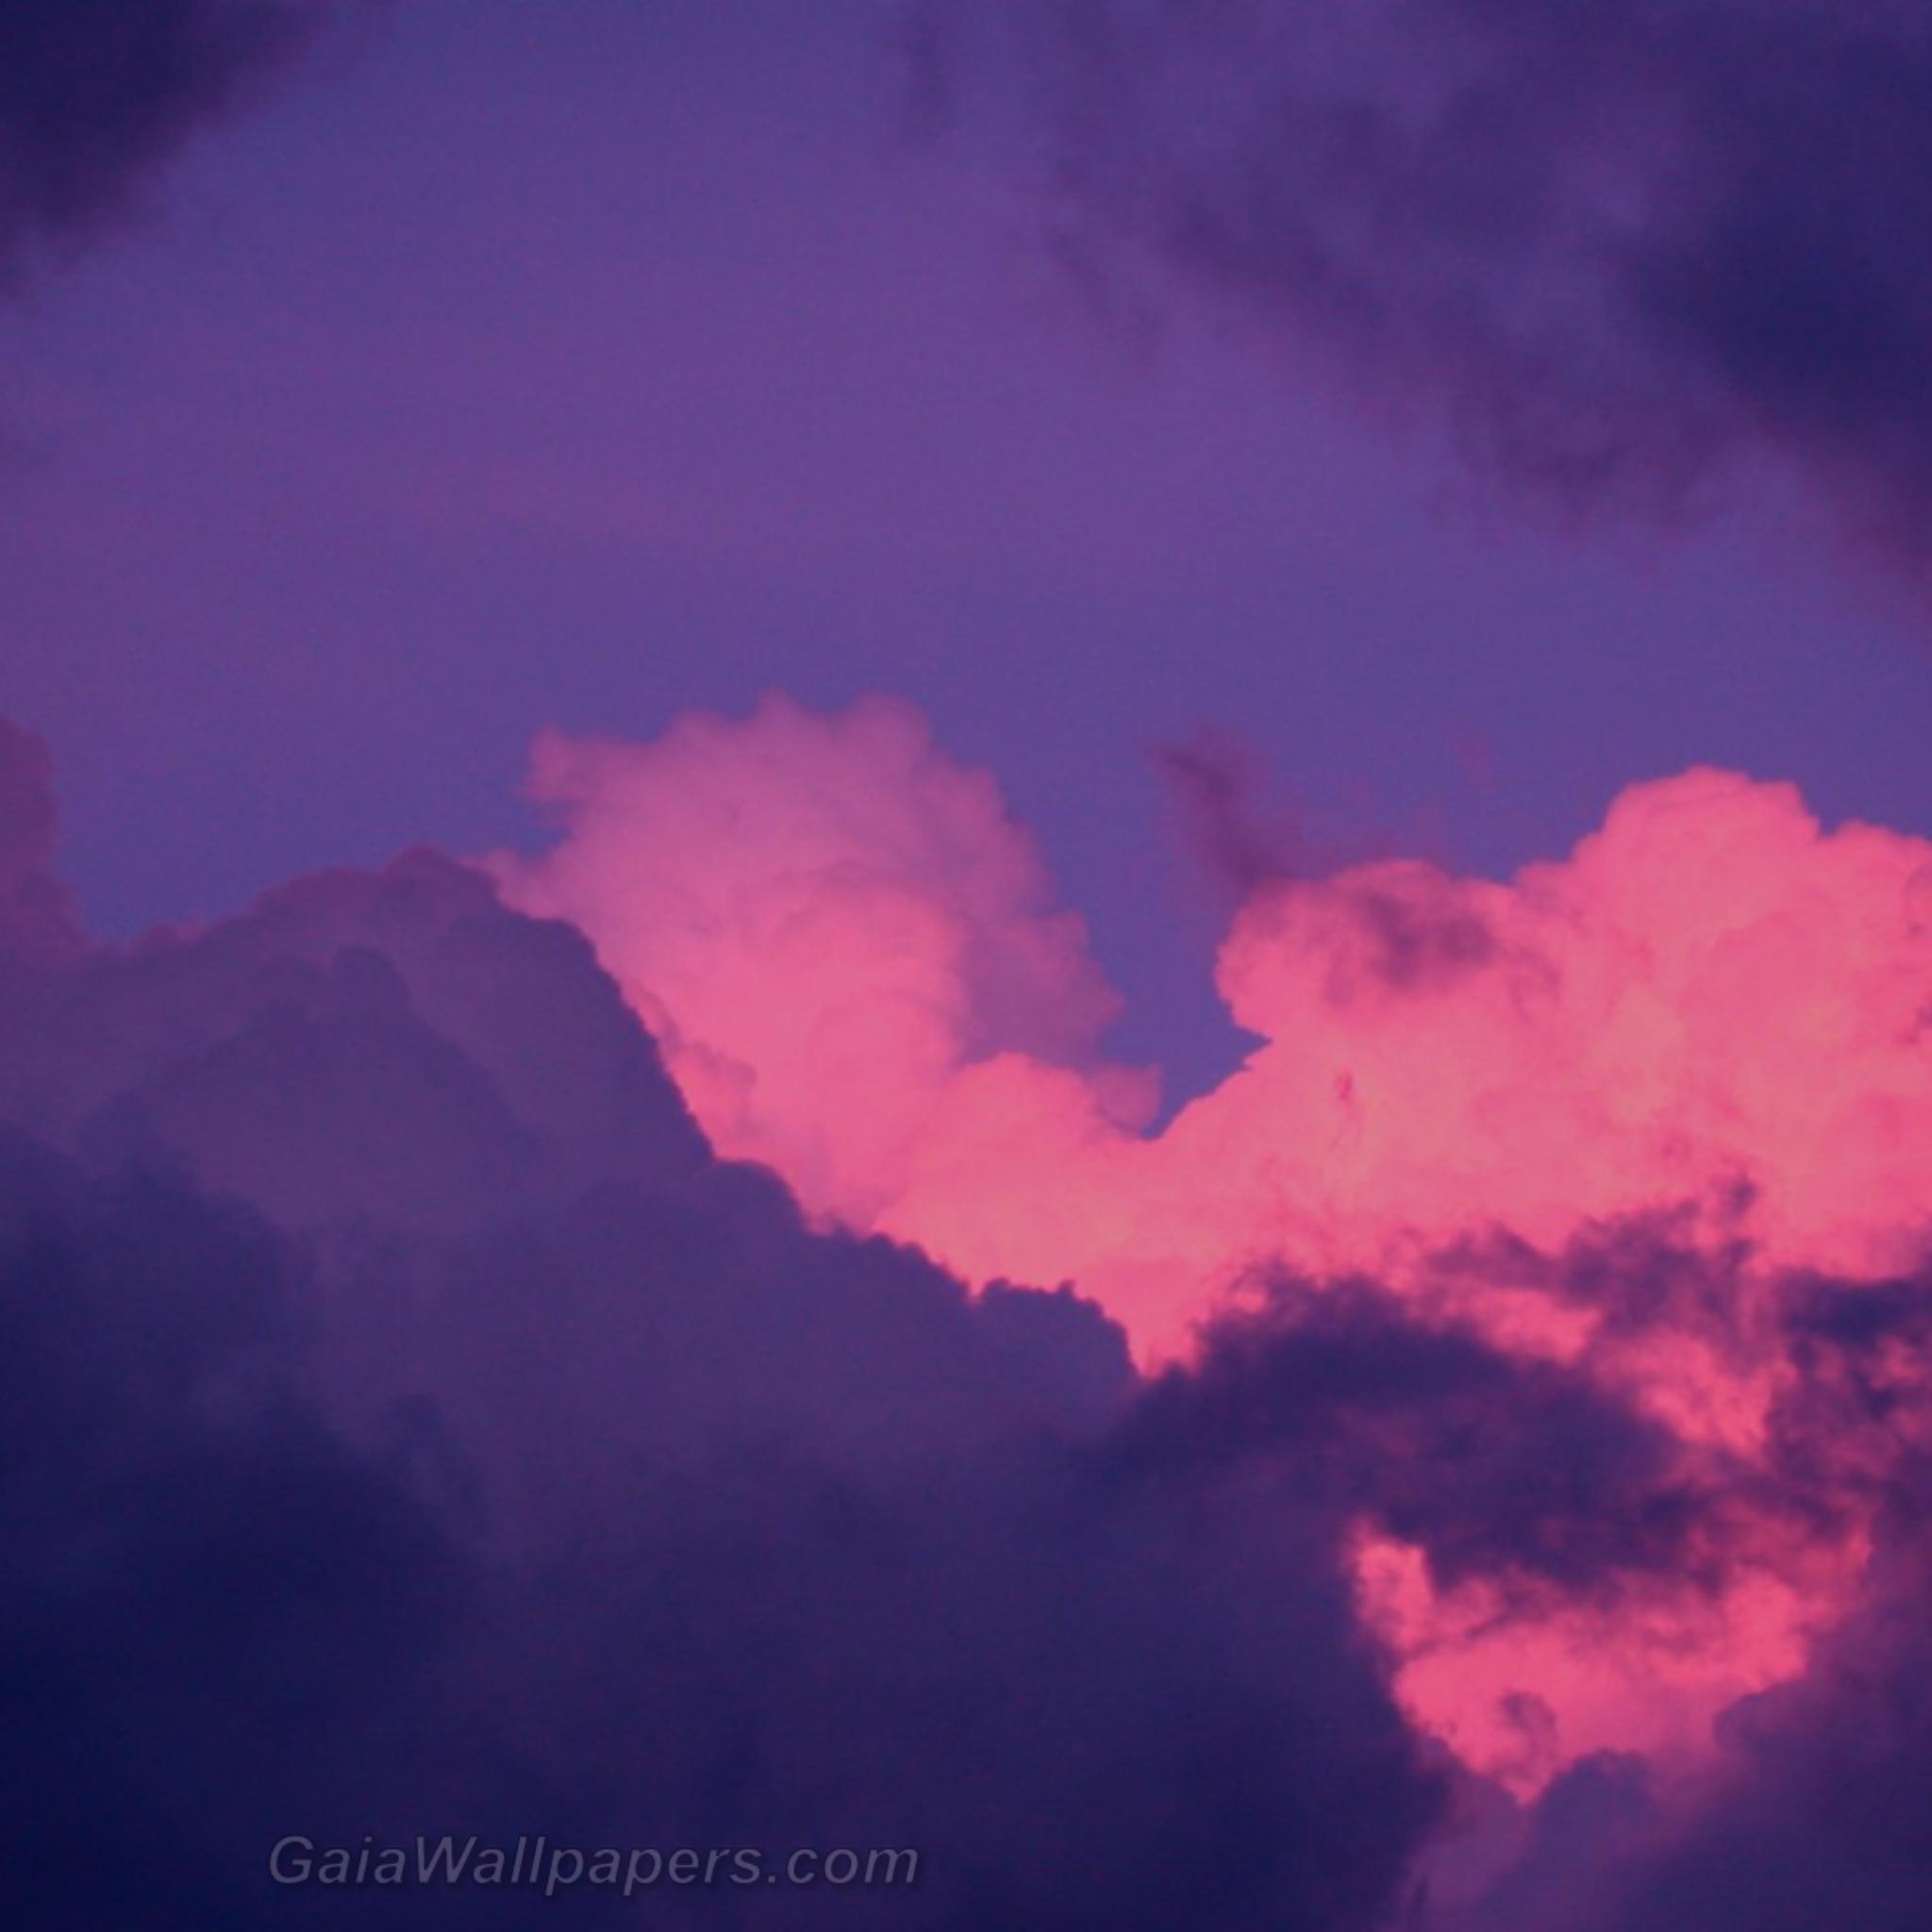 Pink and purple cloud - Free desktop wallpapers